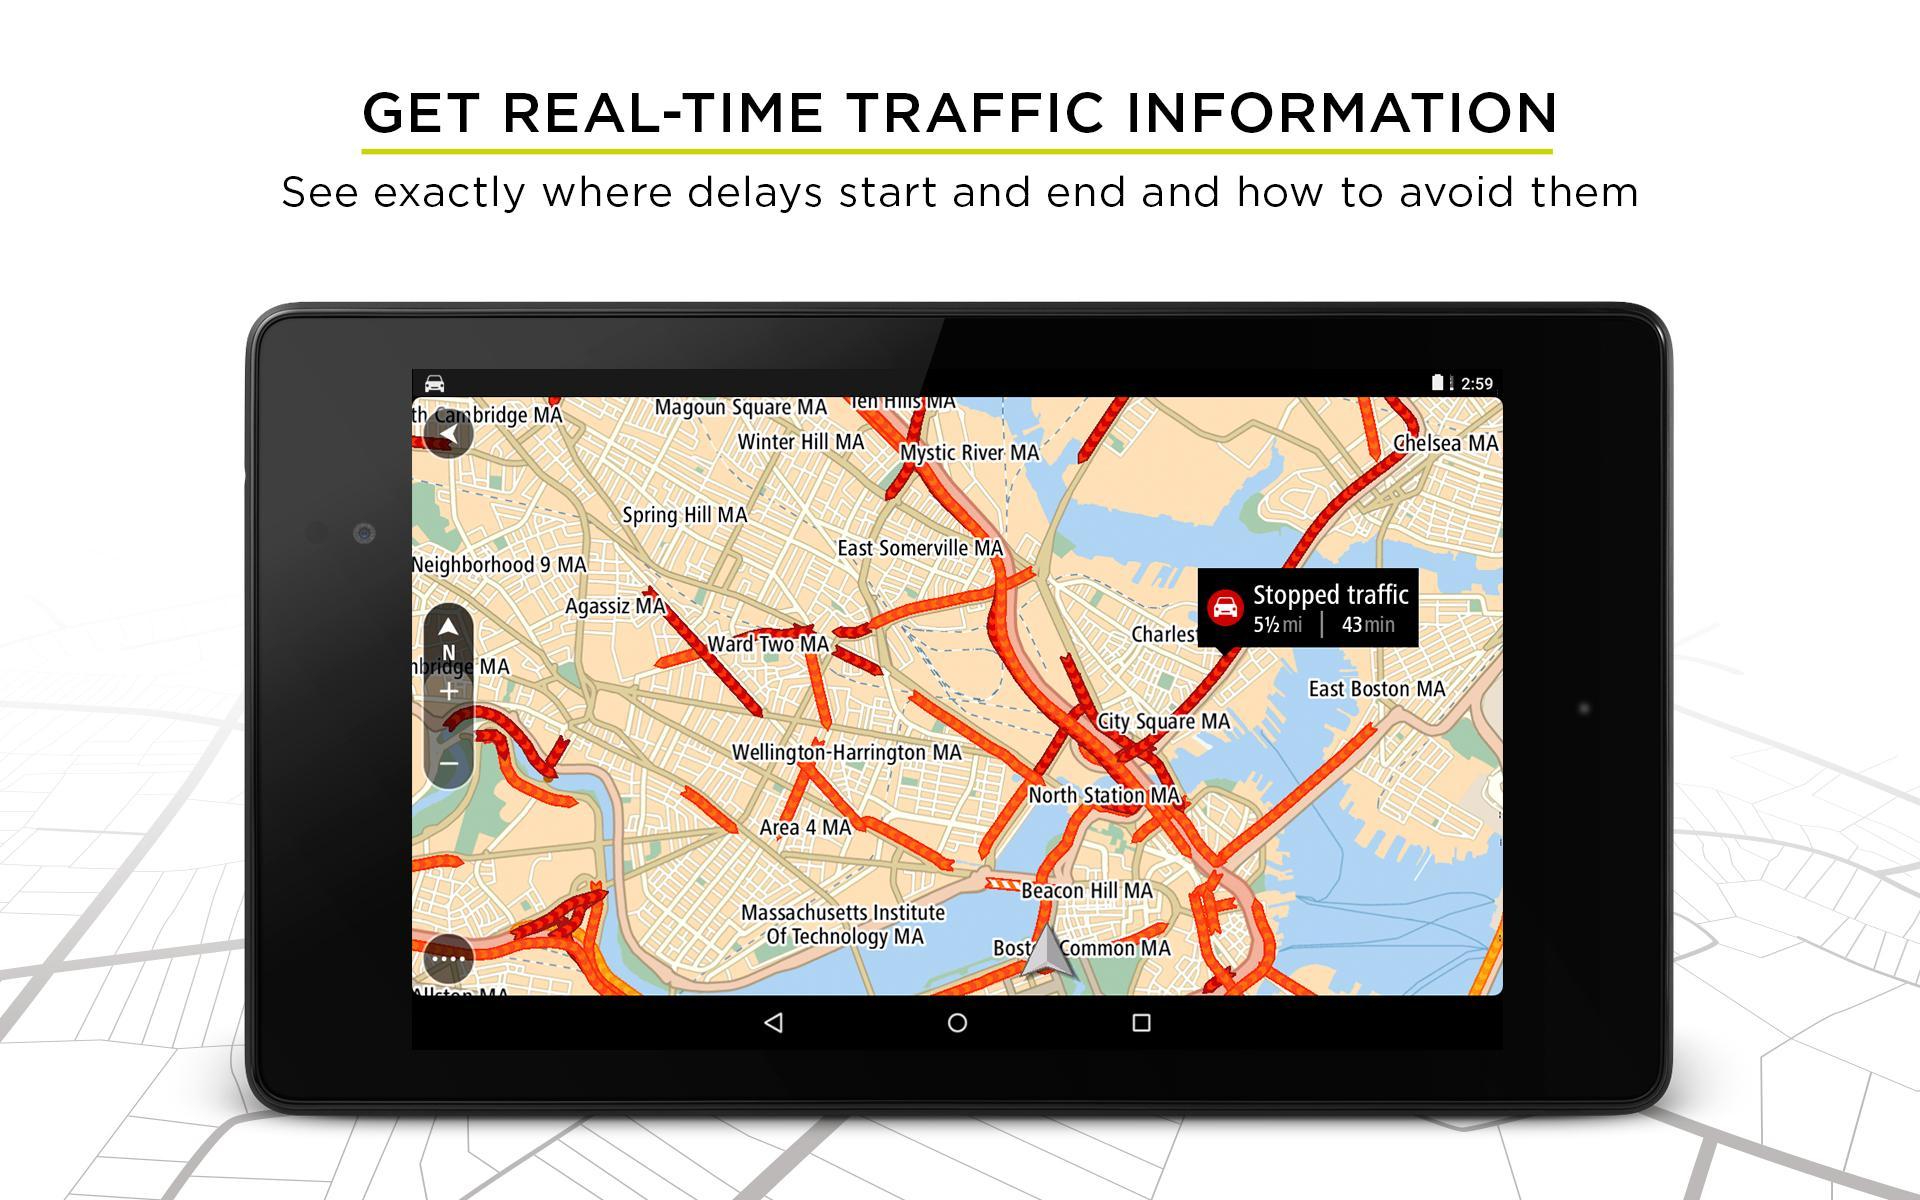 TomTom GPS Navigation - Live Traffic Alerts & Maps 2.0.4 Screenshot 16